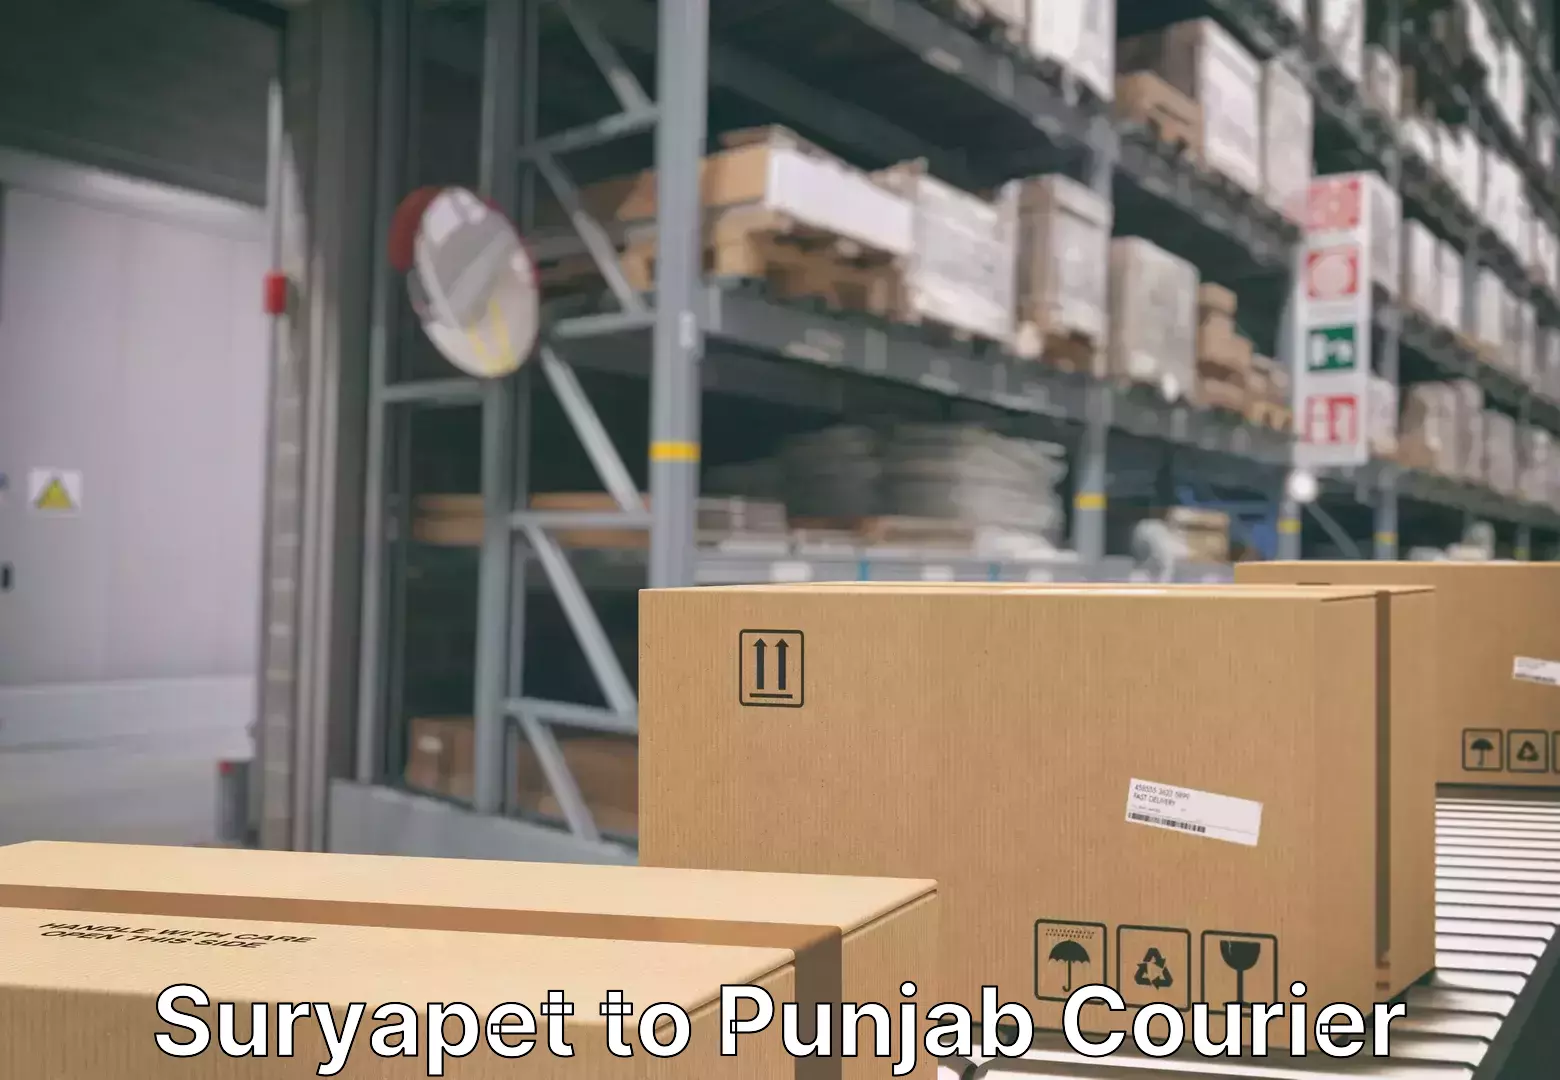 Moving and packing experts Suryapet to Punjab